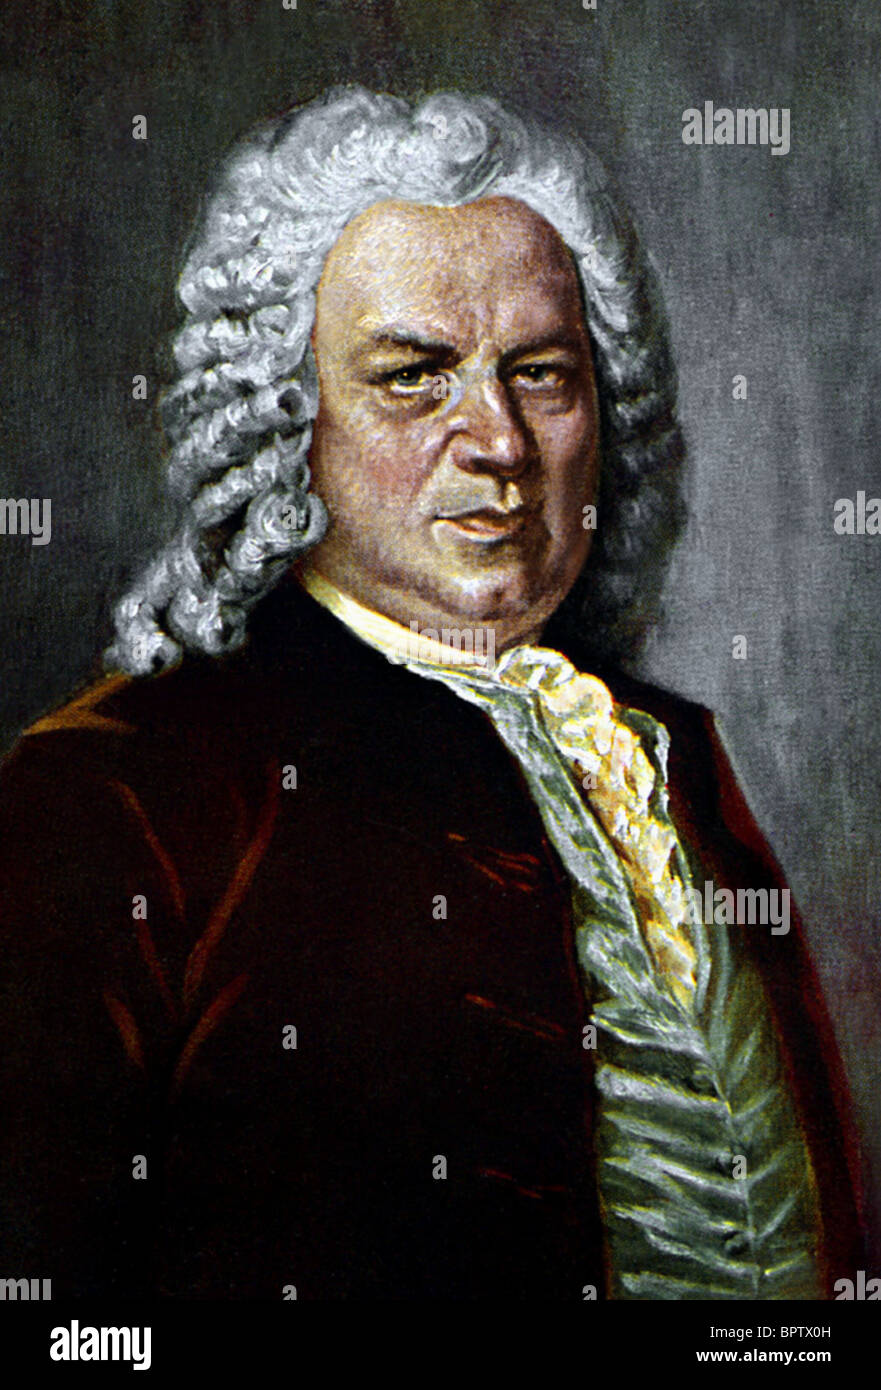 JOHANN SEBASTIAN BACH MUSIC COMPOSER (1753) Stock Photo